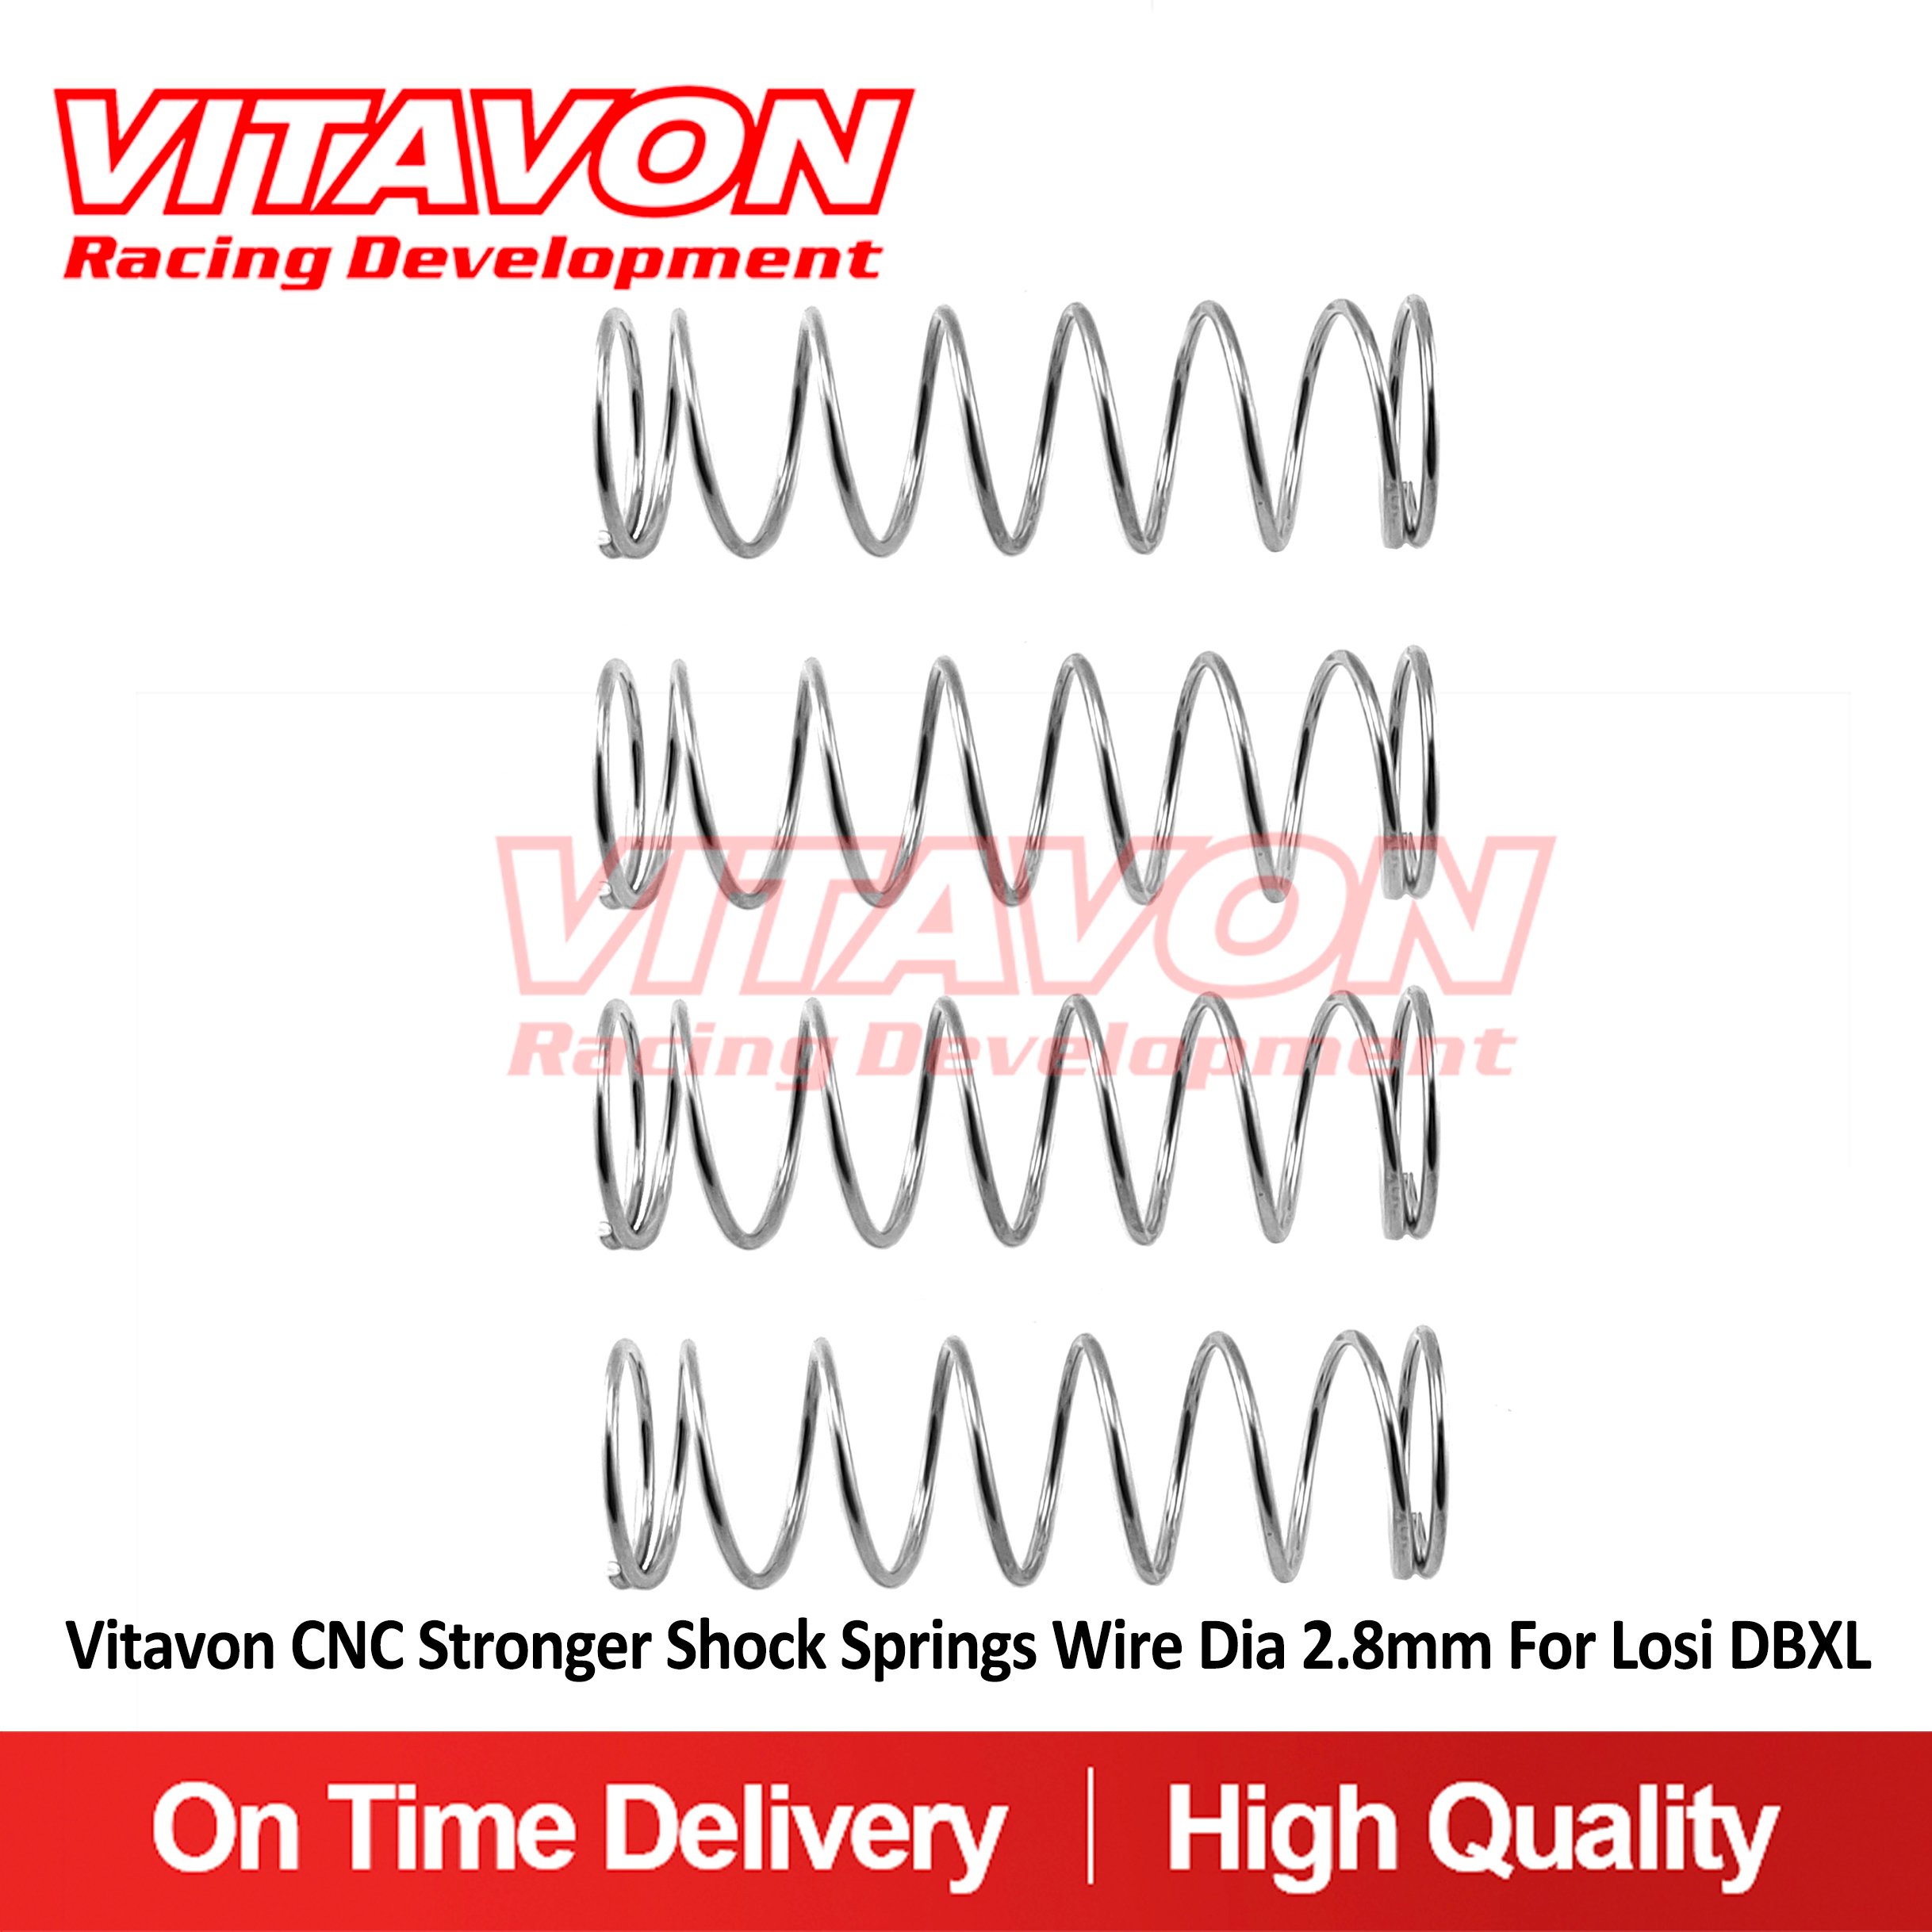 Vitavon CNC Stronger Shock Springs Wire Dia 2.8mm for Losi DBXL